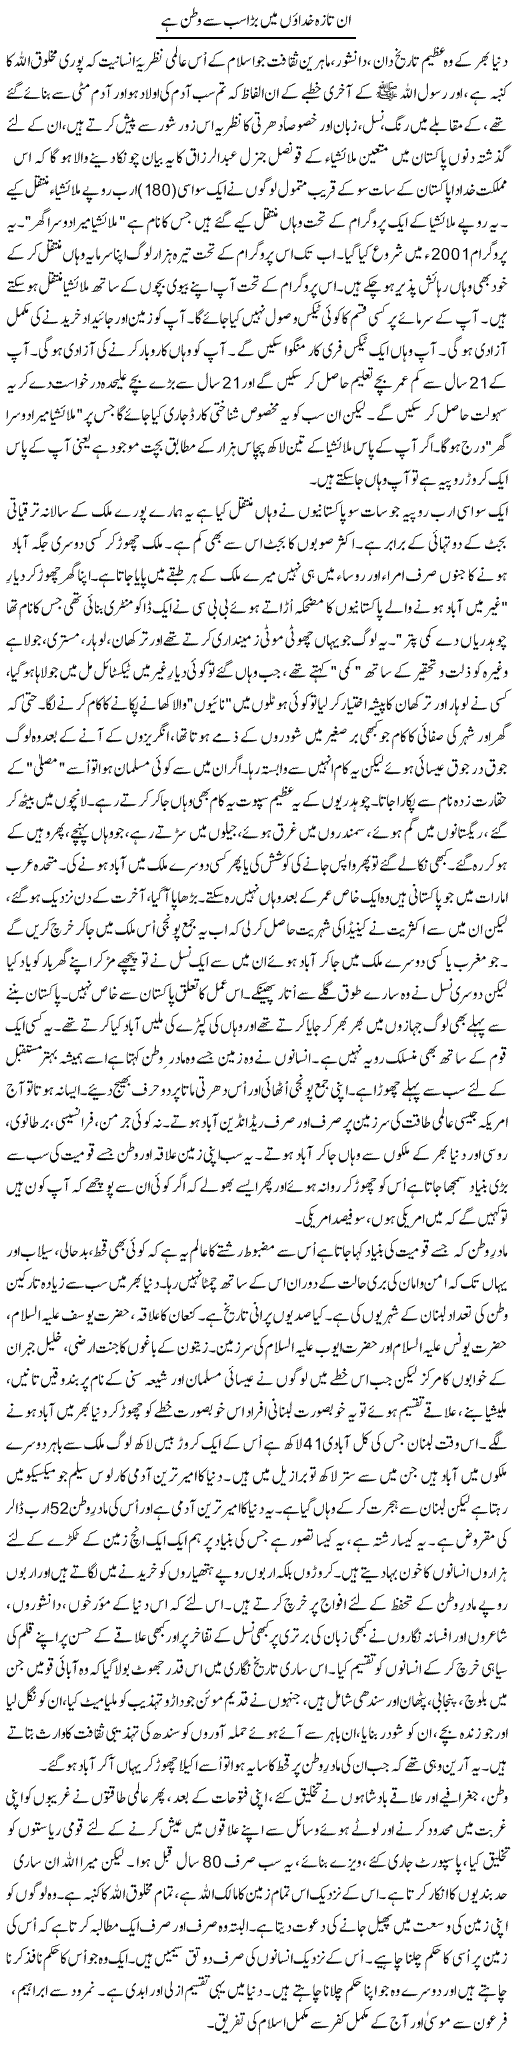 Nationalism and Islam Express Column Orya Maqbool 18 June 2011